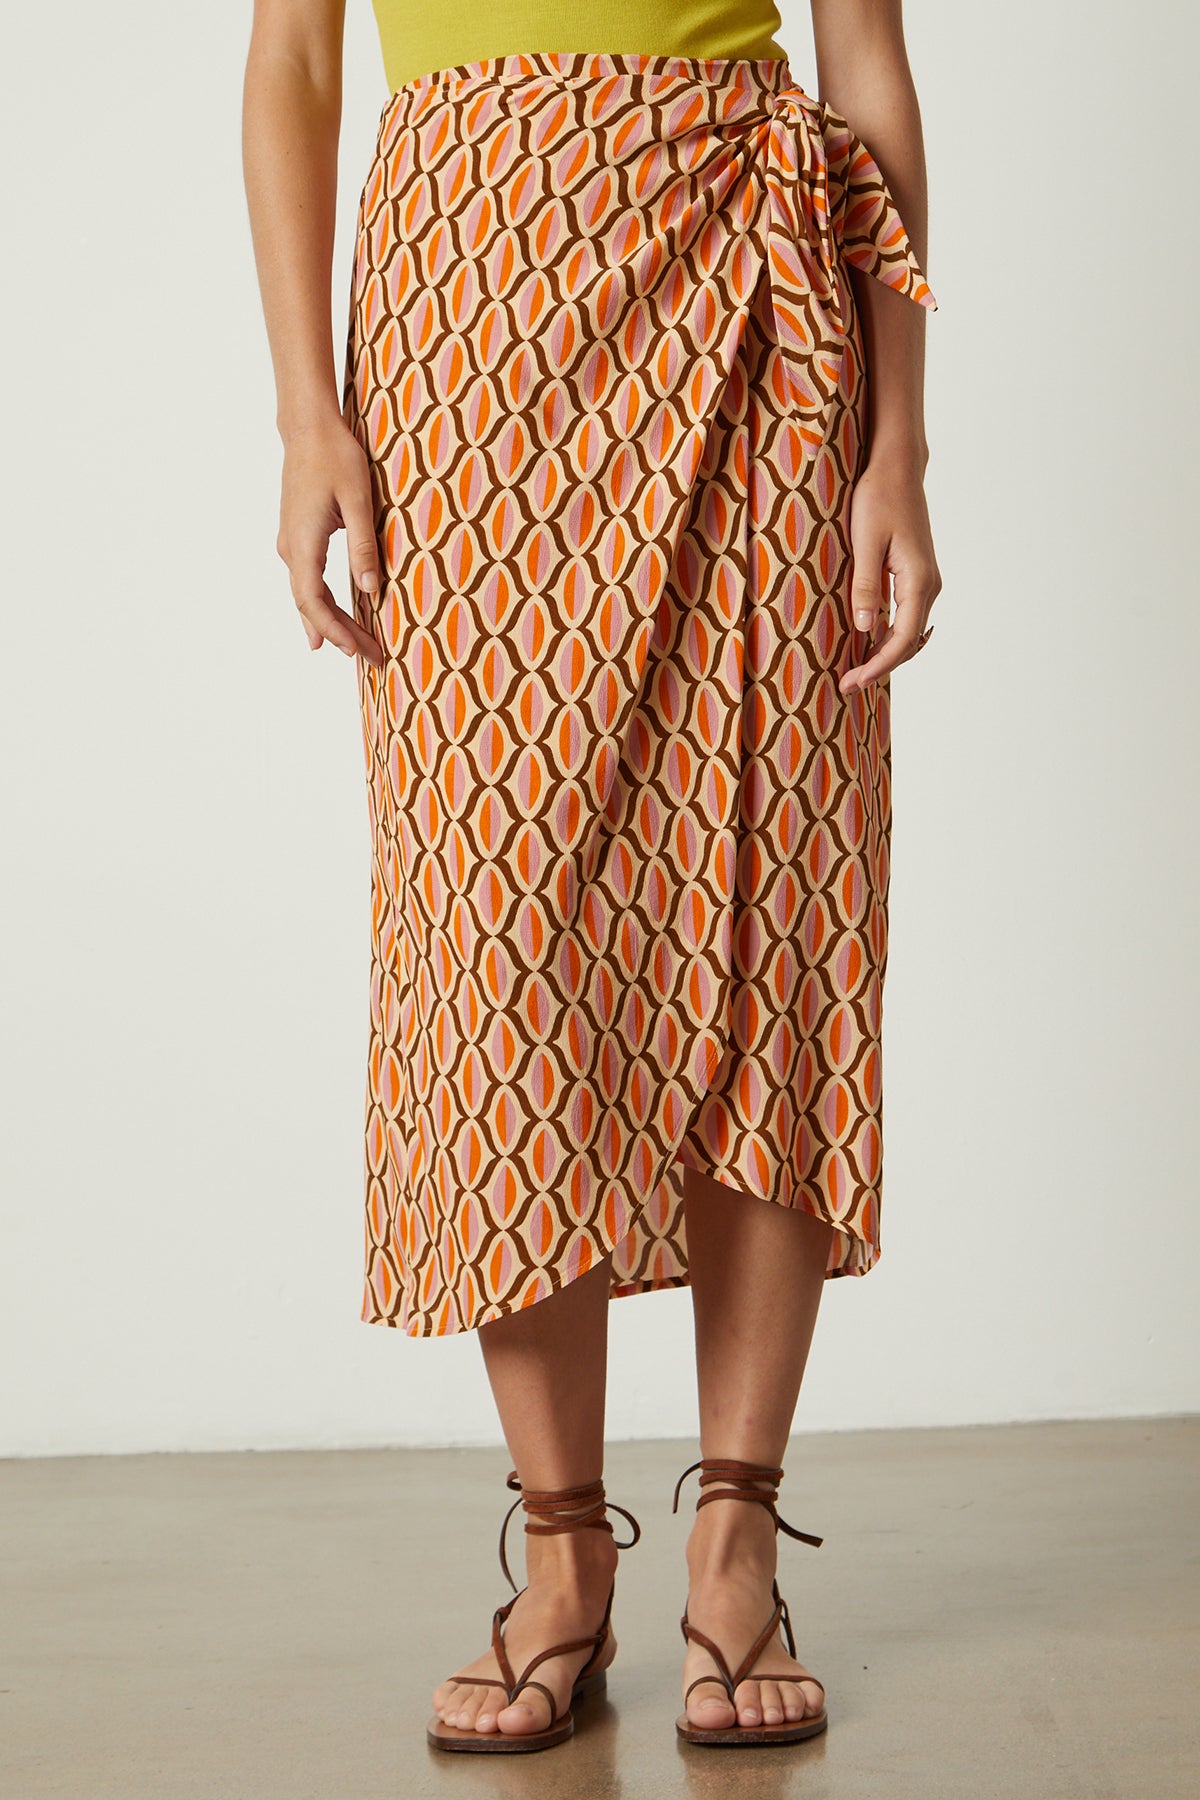 Alisha skirt in orange geometric pattern with sandals front-26078931878081